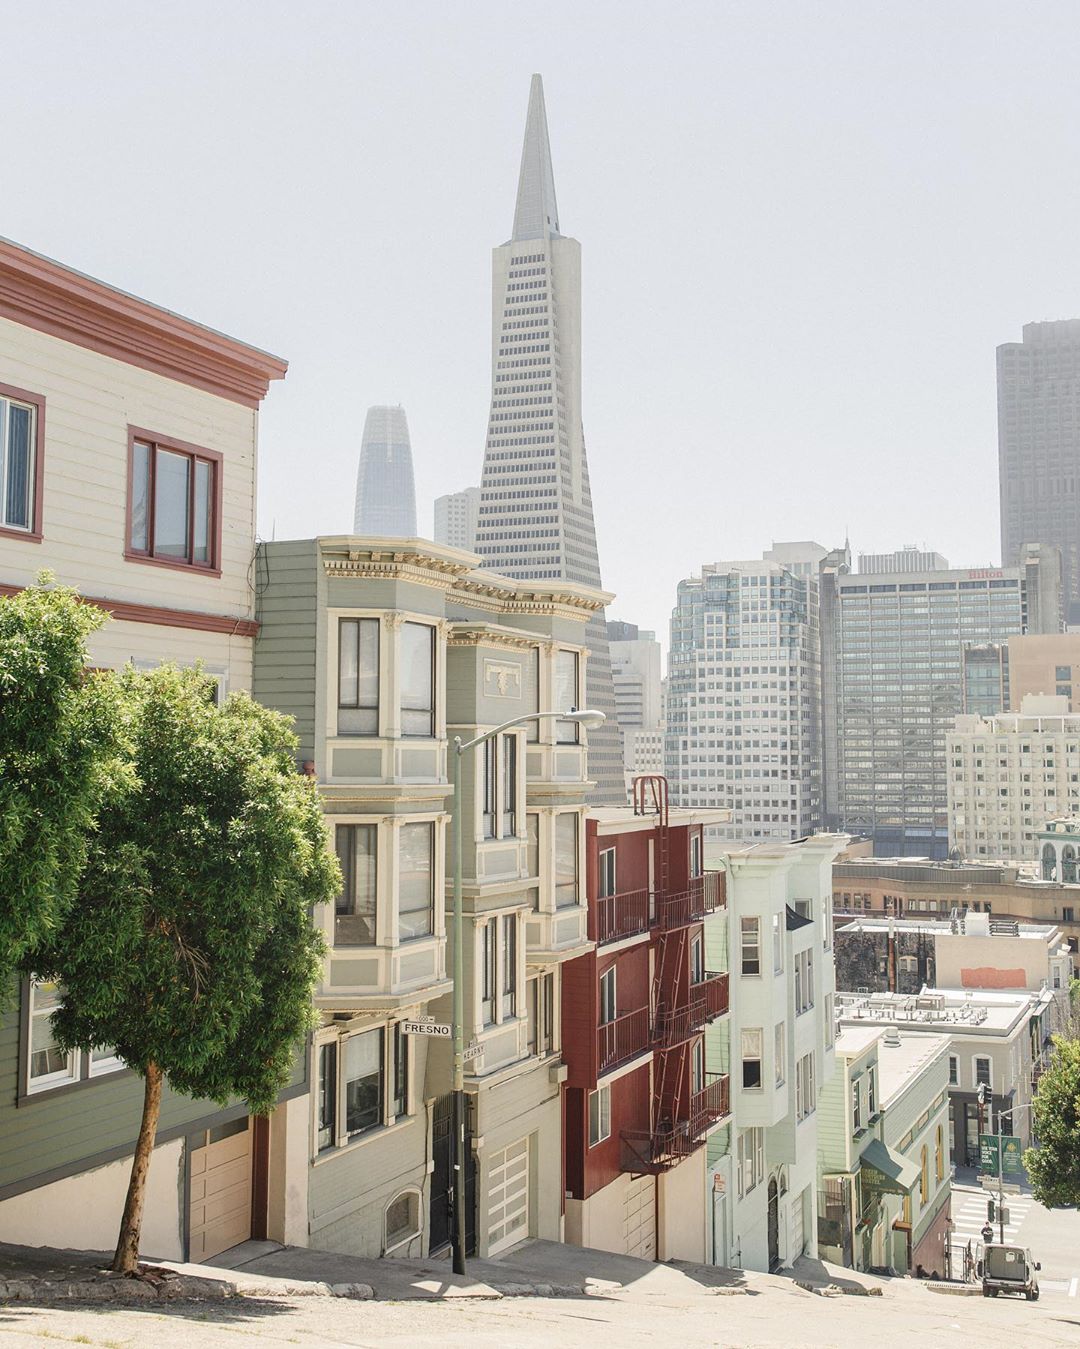 San Francisco skyscrapers in the North Beach neighborhood. Photo by Instagram user @torreyfox